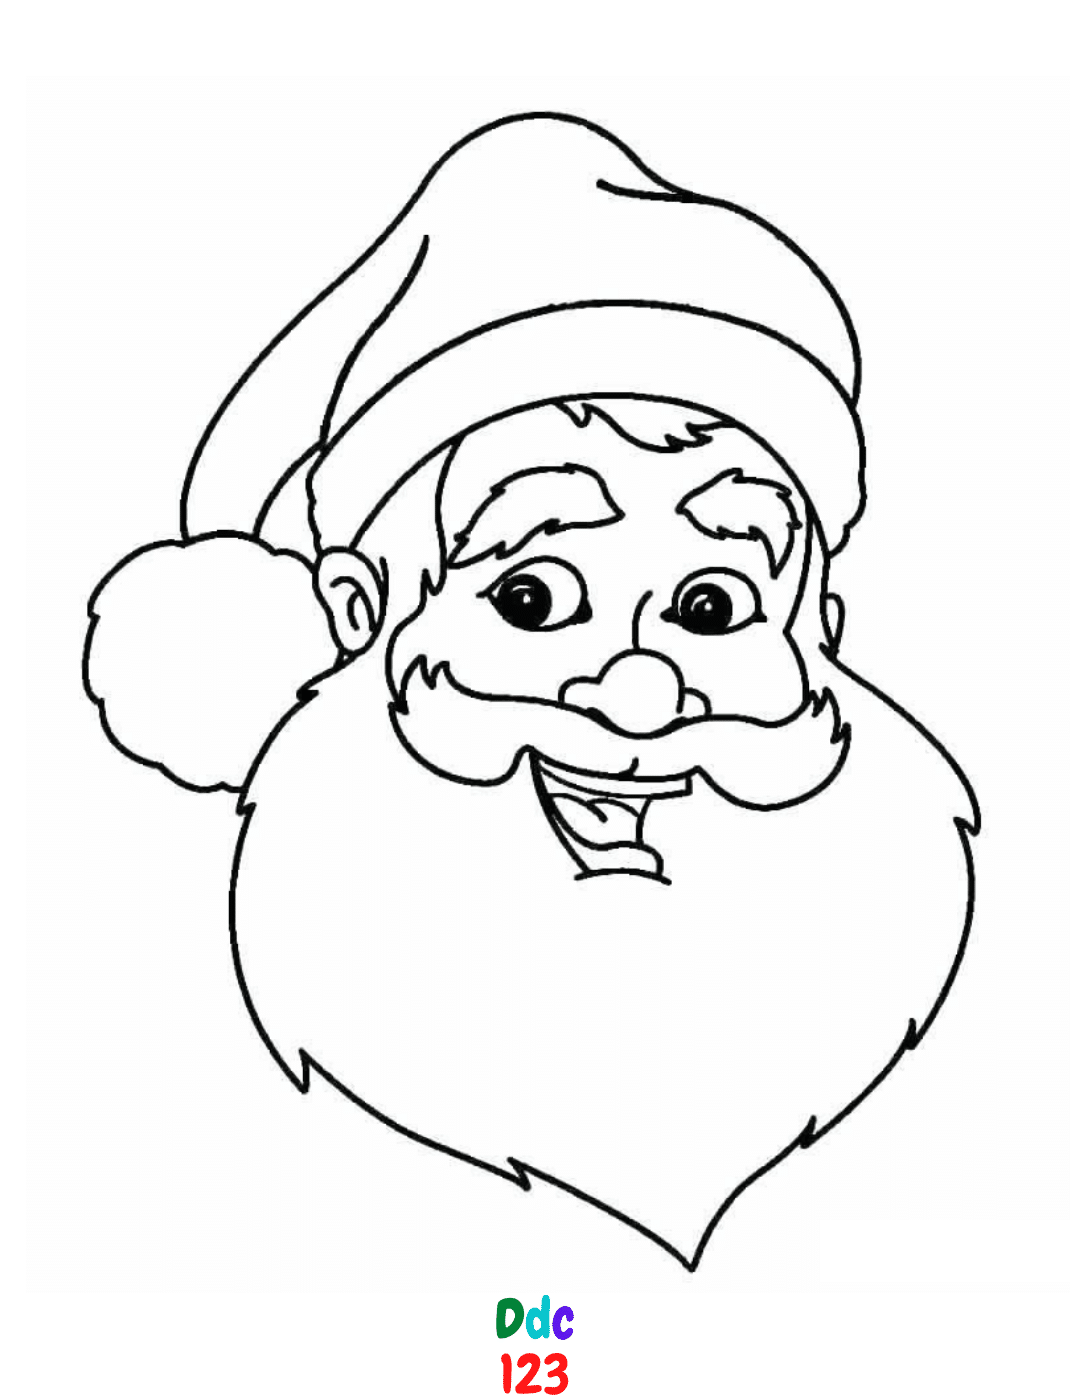 Christmas Santa Coloring Page for Kids  Free Santa Claus Printable  Coloring Pages Online for Kids  ColoringPages101com  Coloring Pages for  Kids